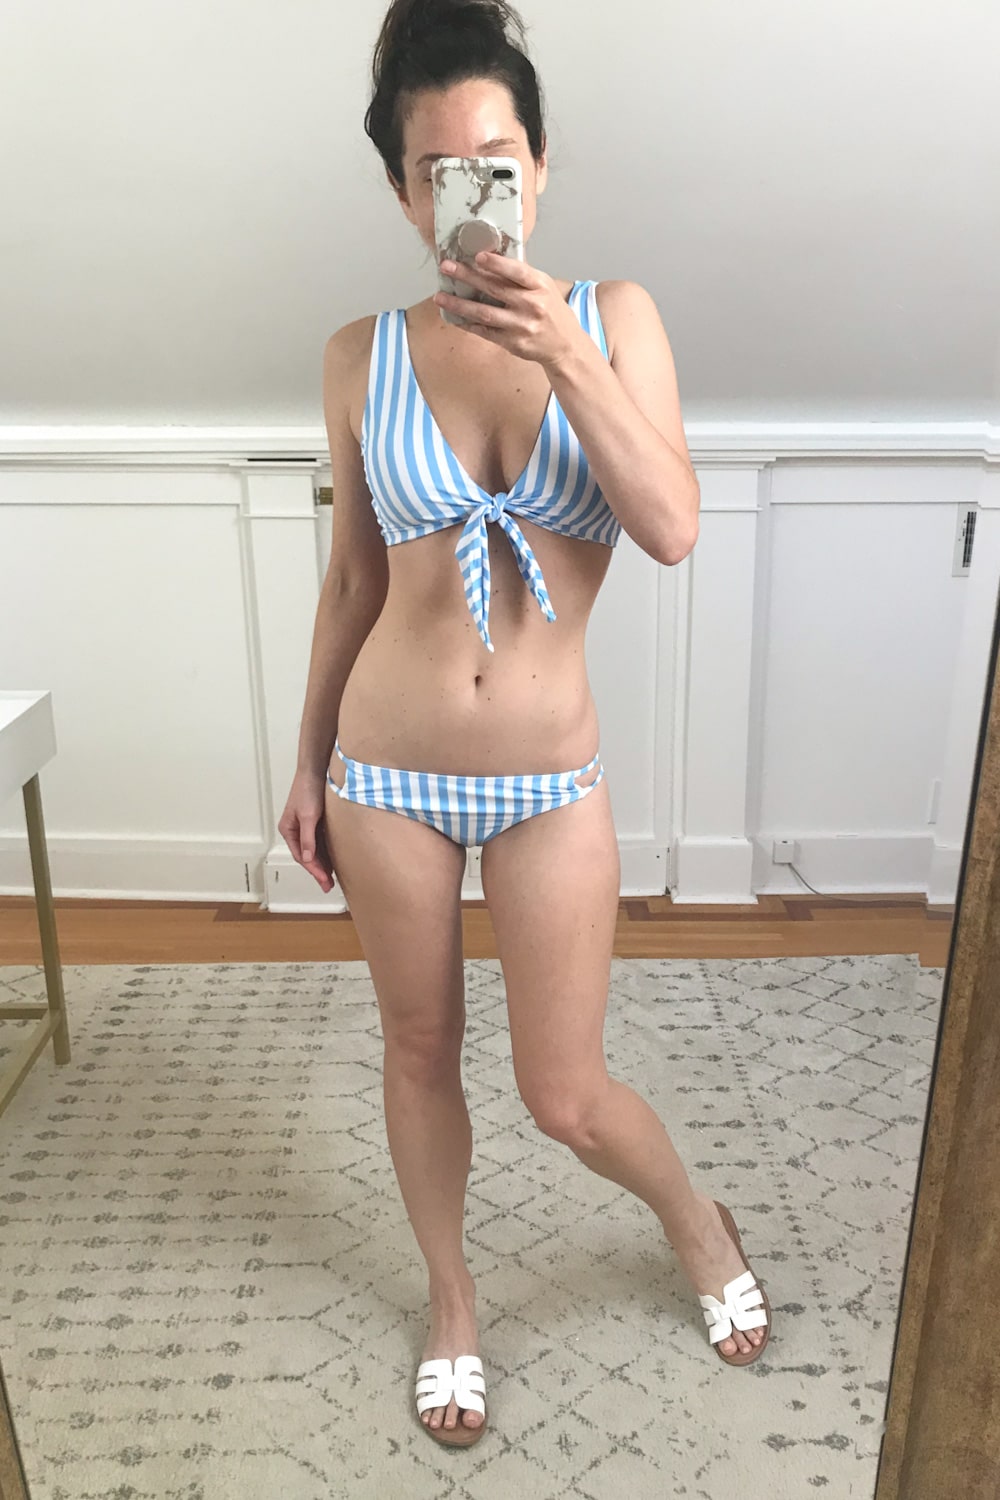 Amazon blue cabana striped bikini set tried on by affordable fashion blogger Stephanie Ziajka on Diary of a Debutante